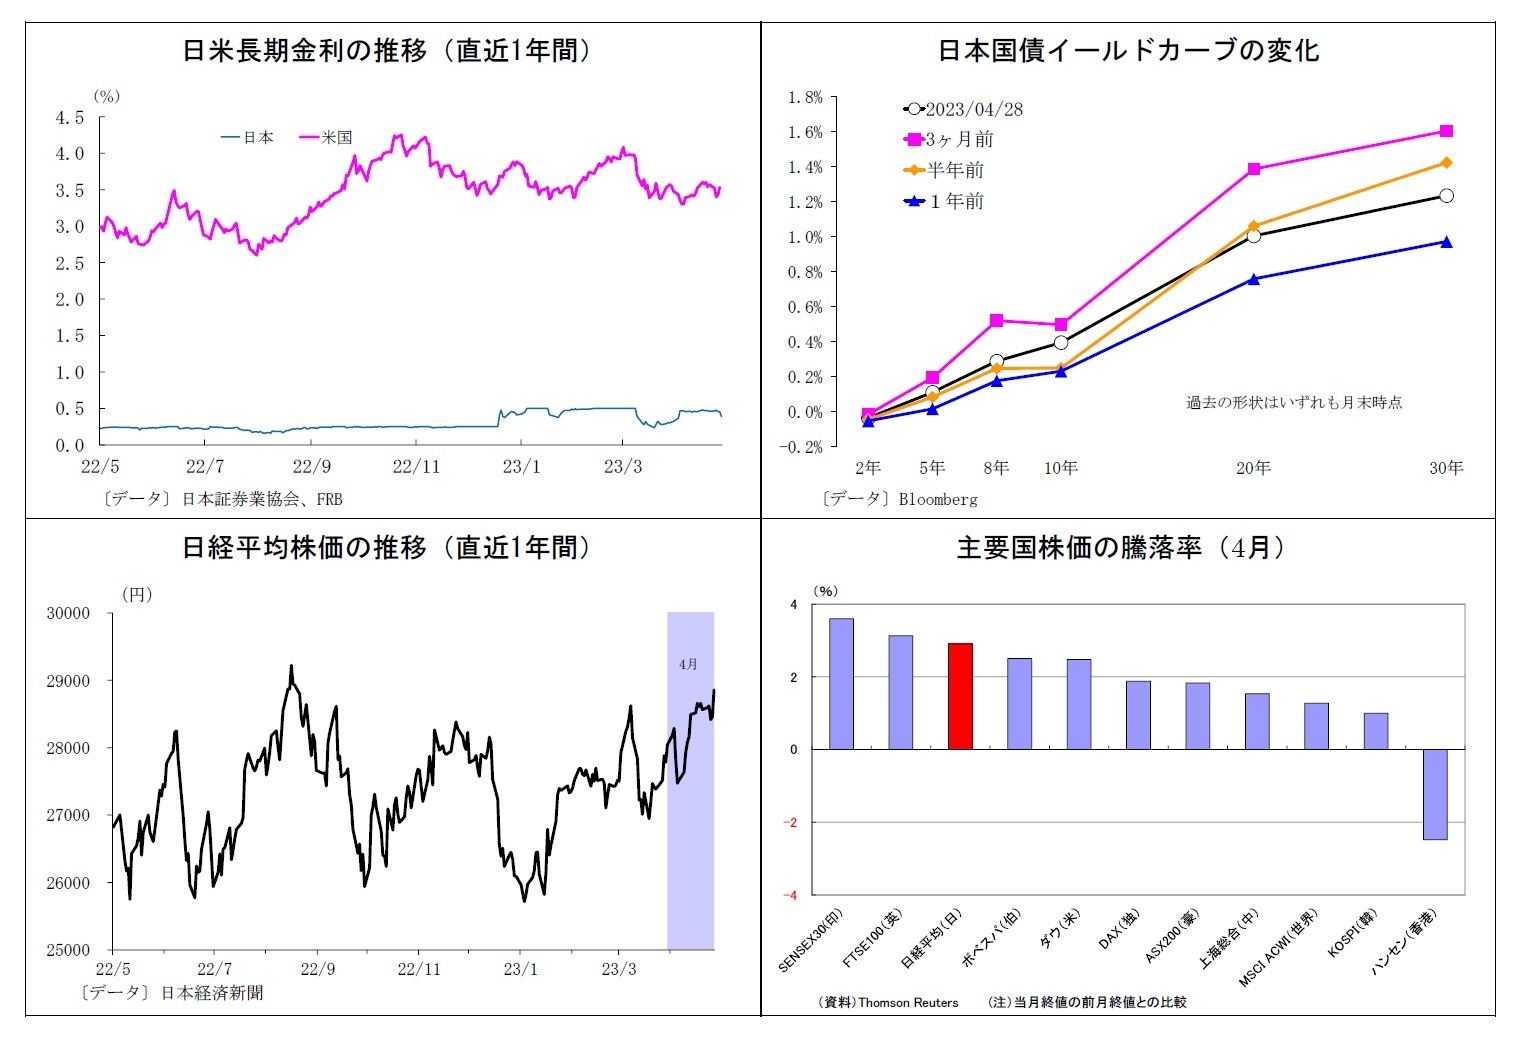 日米長期金利の推移（直近1年間）/日本国債イールドカーブの変化/日経平均株価の推移（直近1年間）/主要国株価の騰落率（4月）